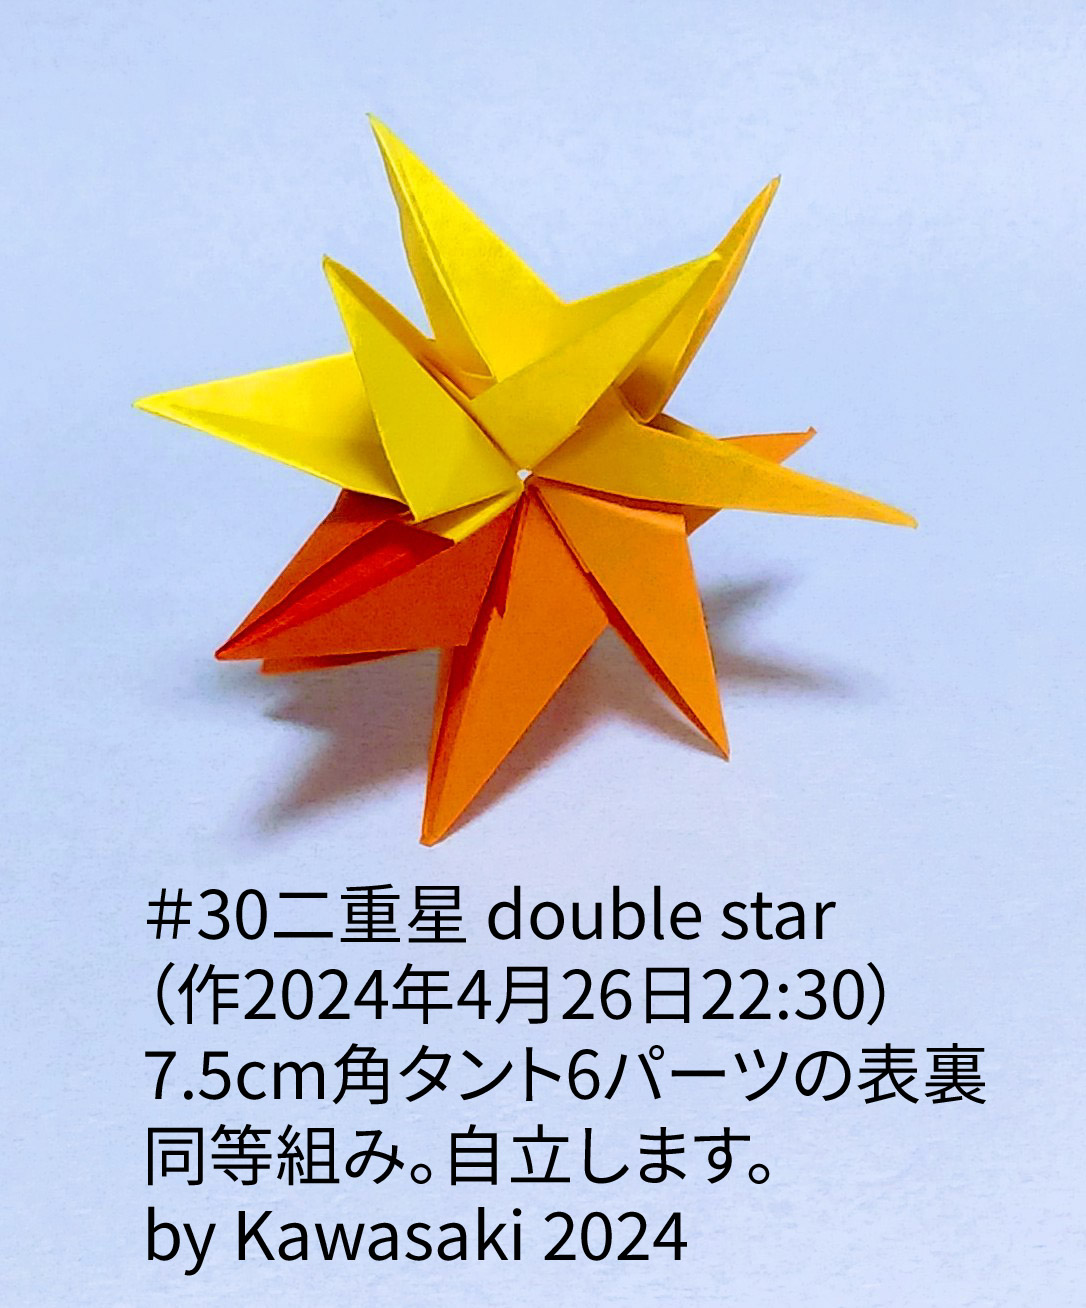 2024/04/26(Fri) 22:46「＃30二重星 double star（2024年4月26日22:30）」川崎敏和 T.Kawasaki
（創作者 Author：川崎敏和 T.Kawasaki,　製作者 Folder：川崎敏和 T.Kawasaki ,　出典 Source：2024年川崎敏和折り紙キット＃30）
 7.5cm角タント6パーツの表裏同等組み。自立します。by Kawasaki 2024